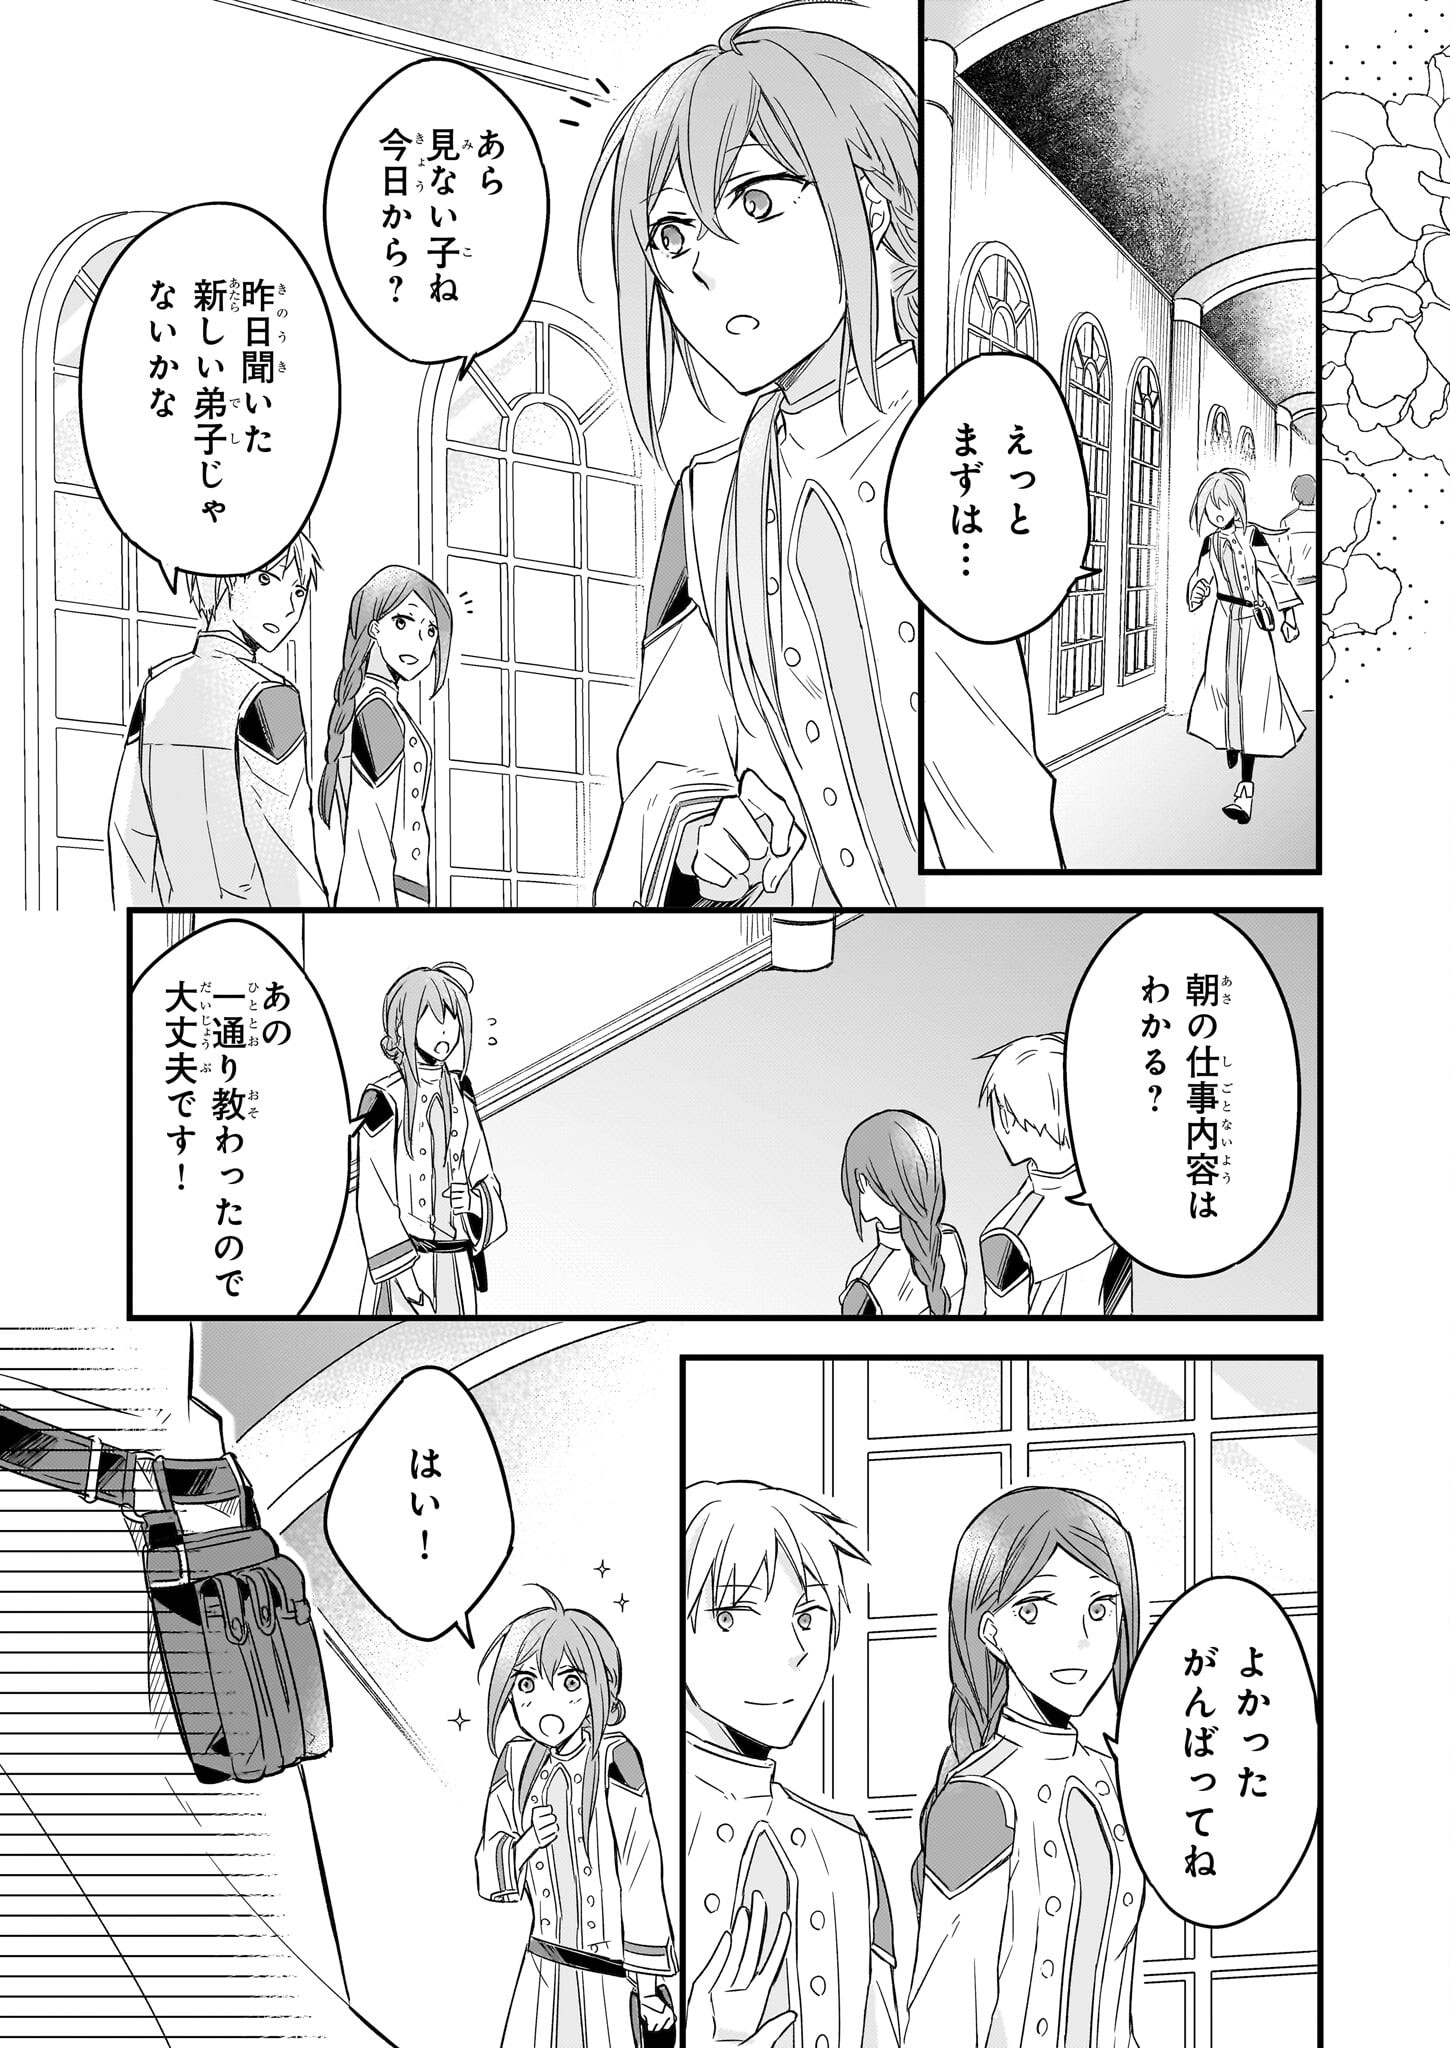 Gaikotsu Ou to Migawari no Oujo – Luna to Okubyou na Ousama - Chapter 4 - Page 3